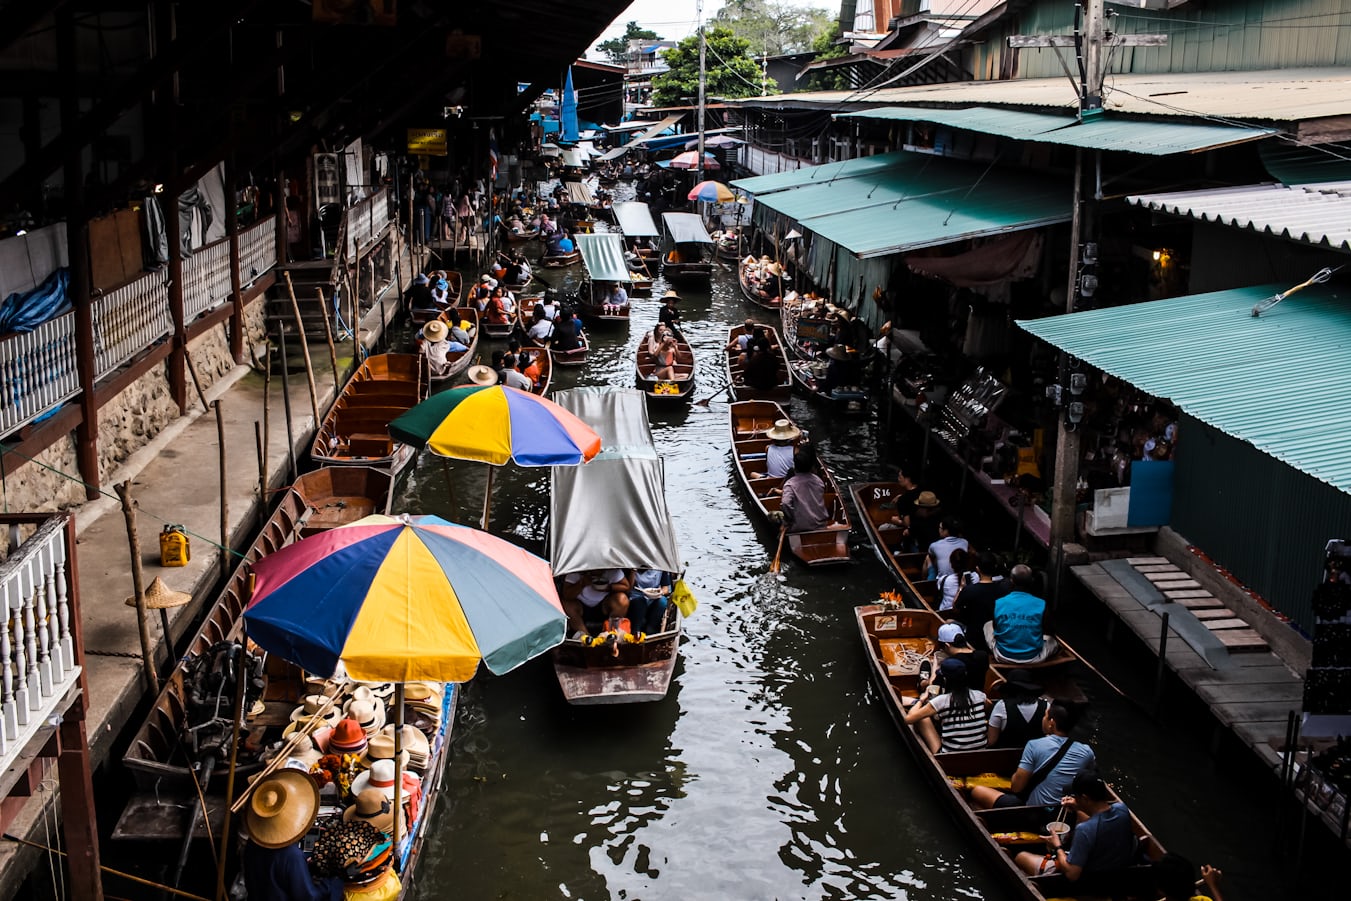 Pasar terapung di Thailand | Frida Aguilar Estrada on Unsplash